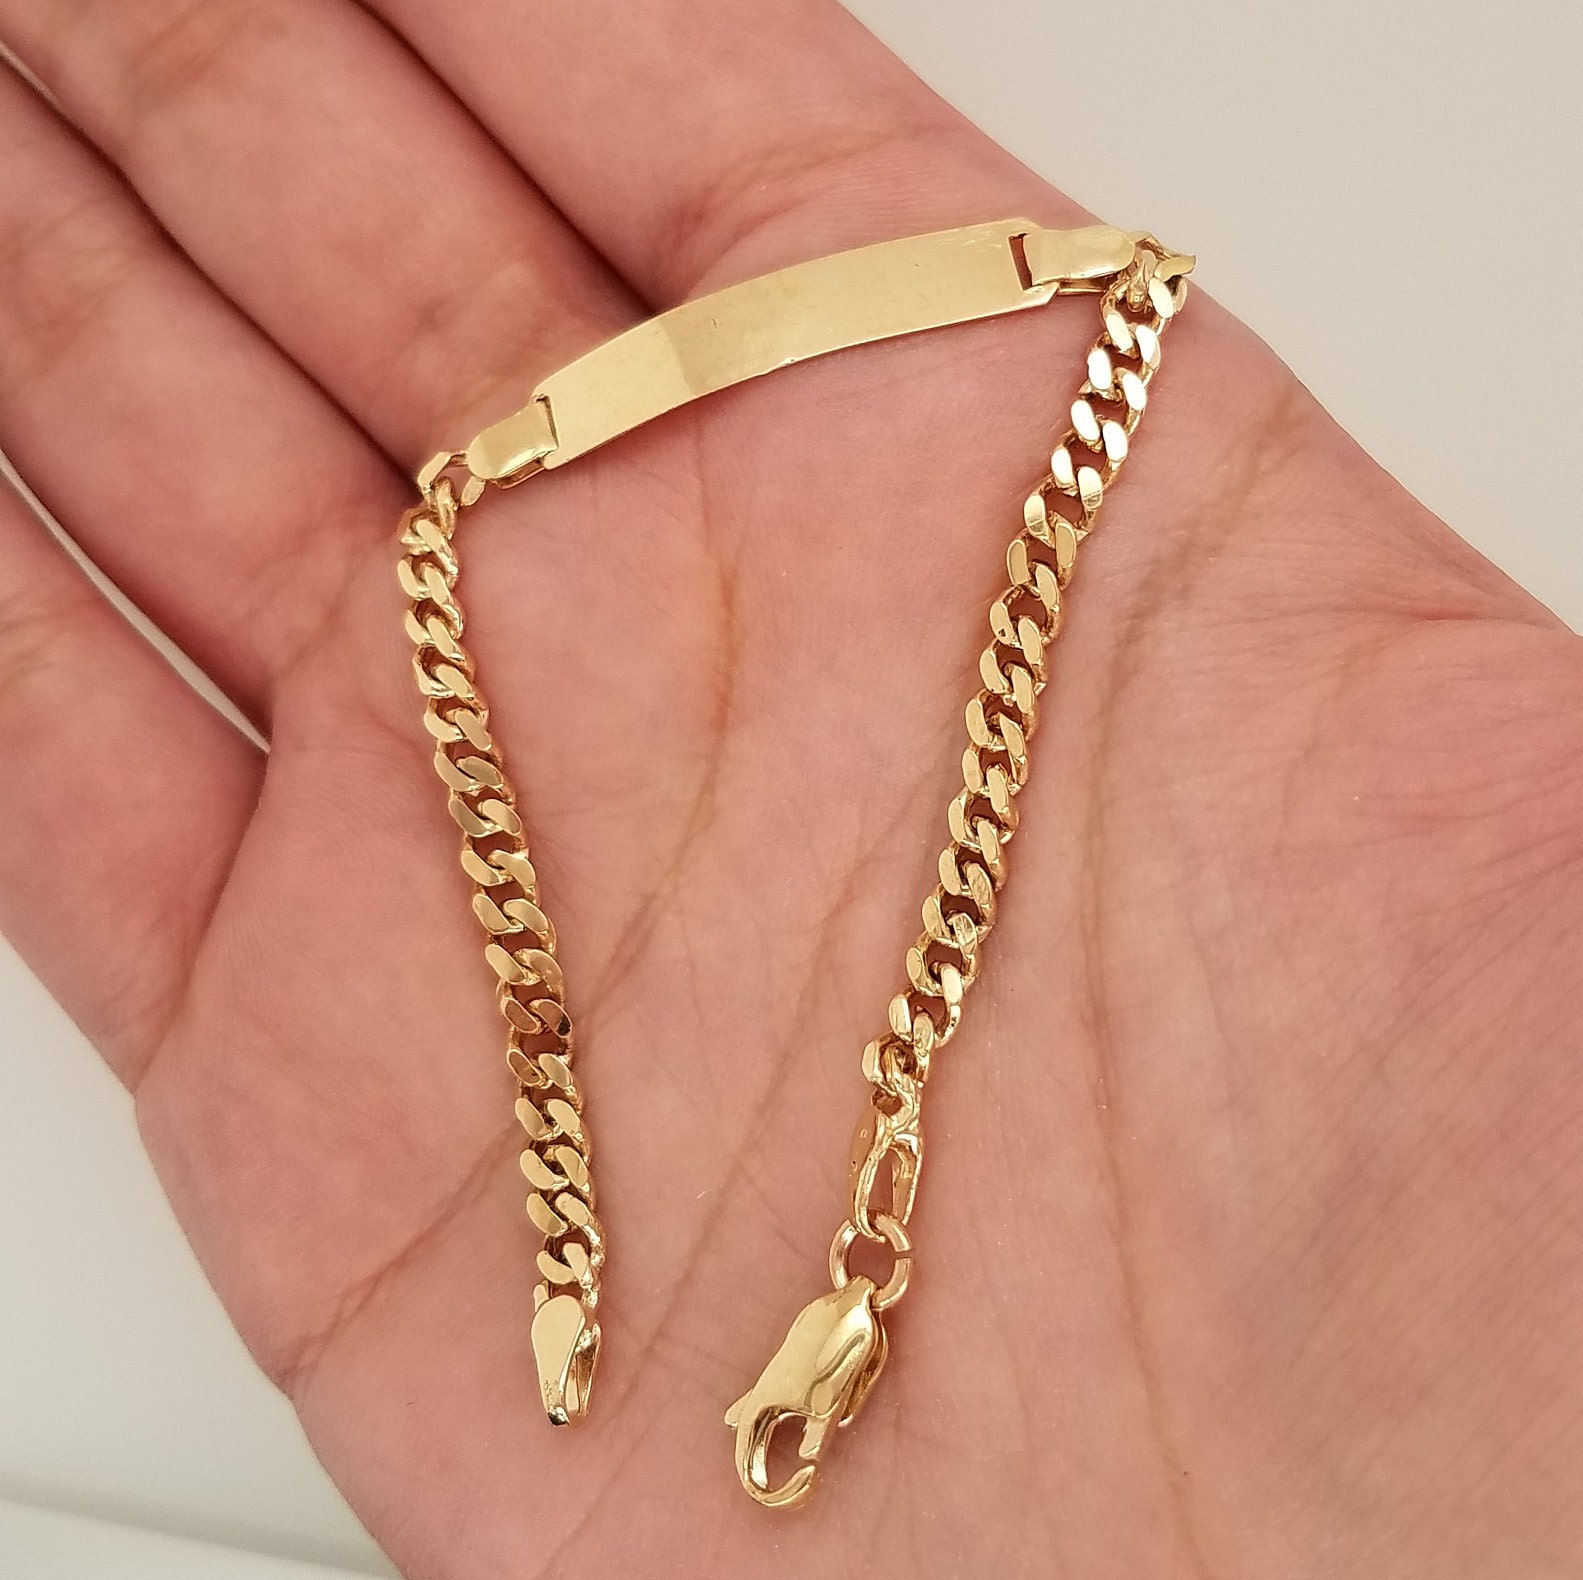 14K Gold Charm Bracelet, Design Your Own Baby/Children’s Link Chain Bracelet for Girls (Includes Diamond Initial) - 14K Gold